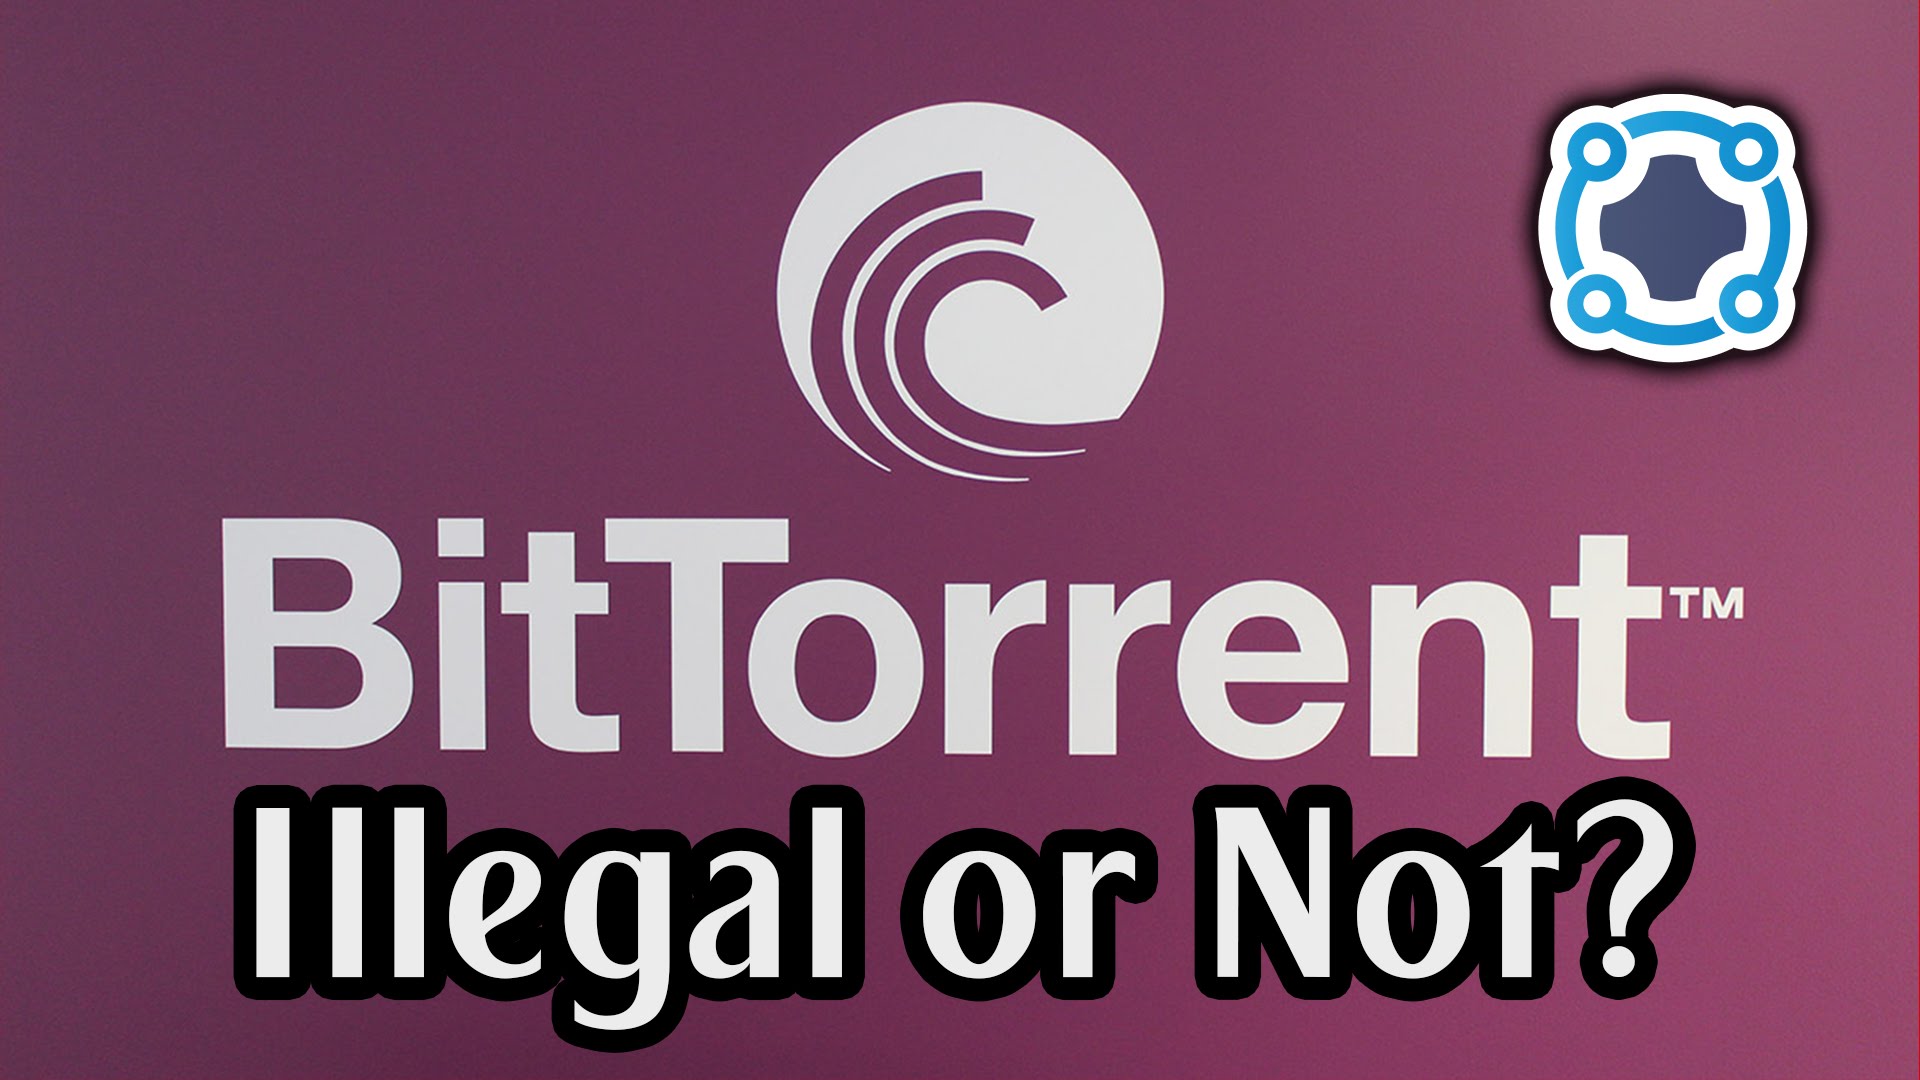 BitTorrent Is Not Illegal